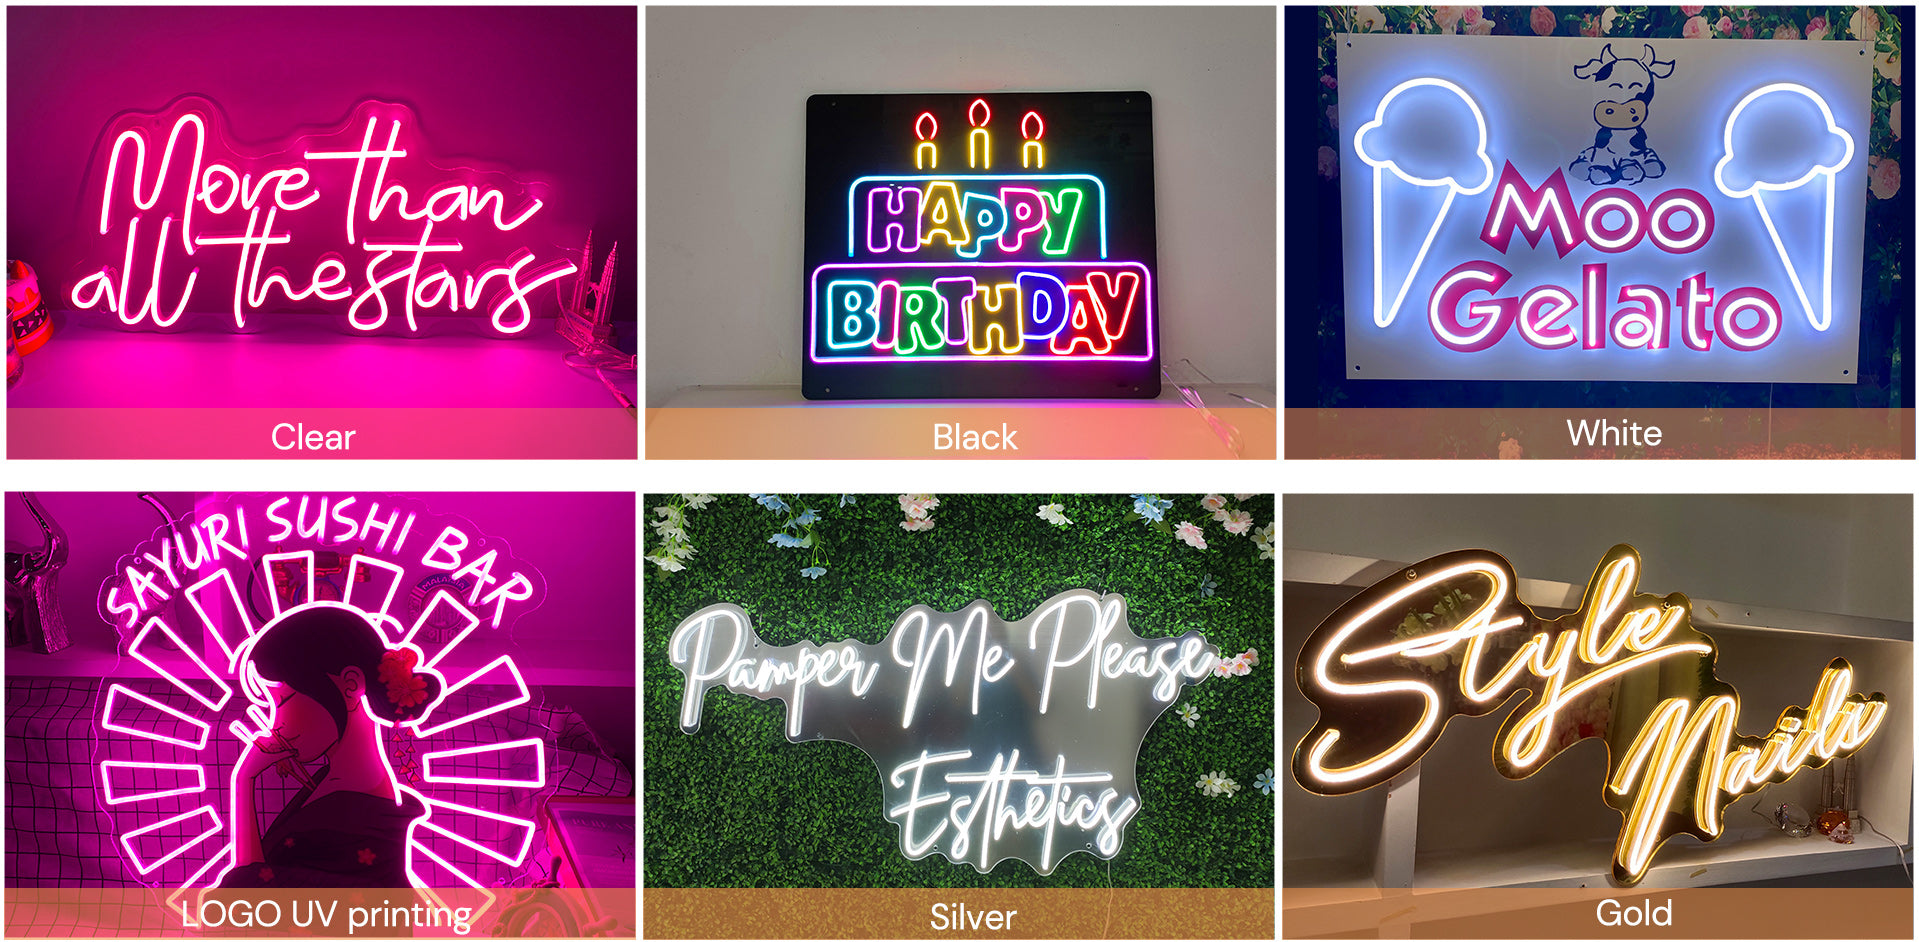 choose Happy birthday  neon sign backboard